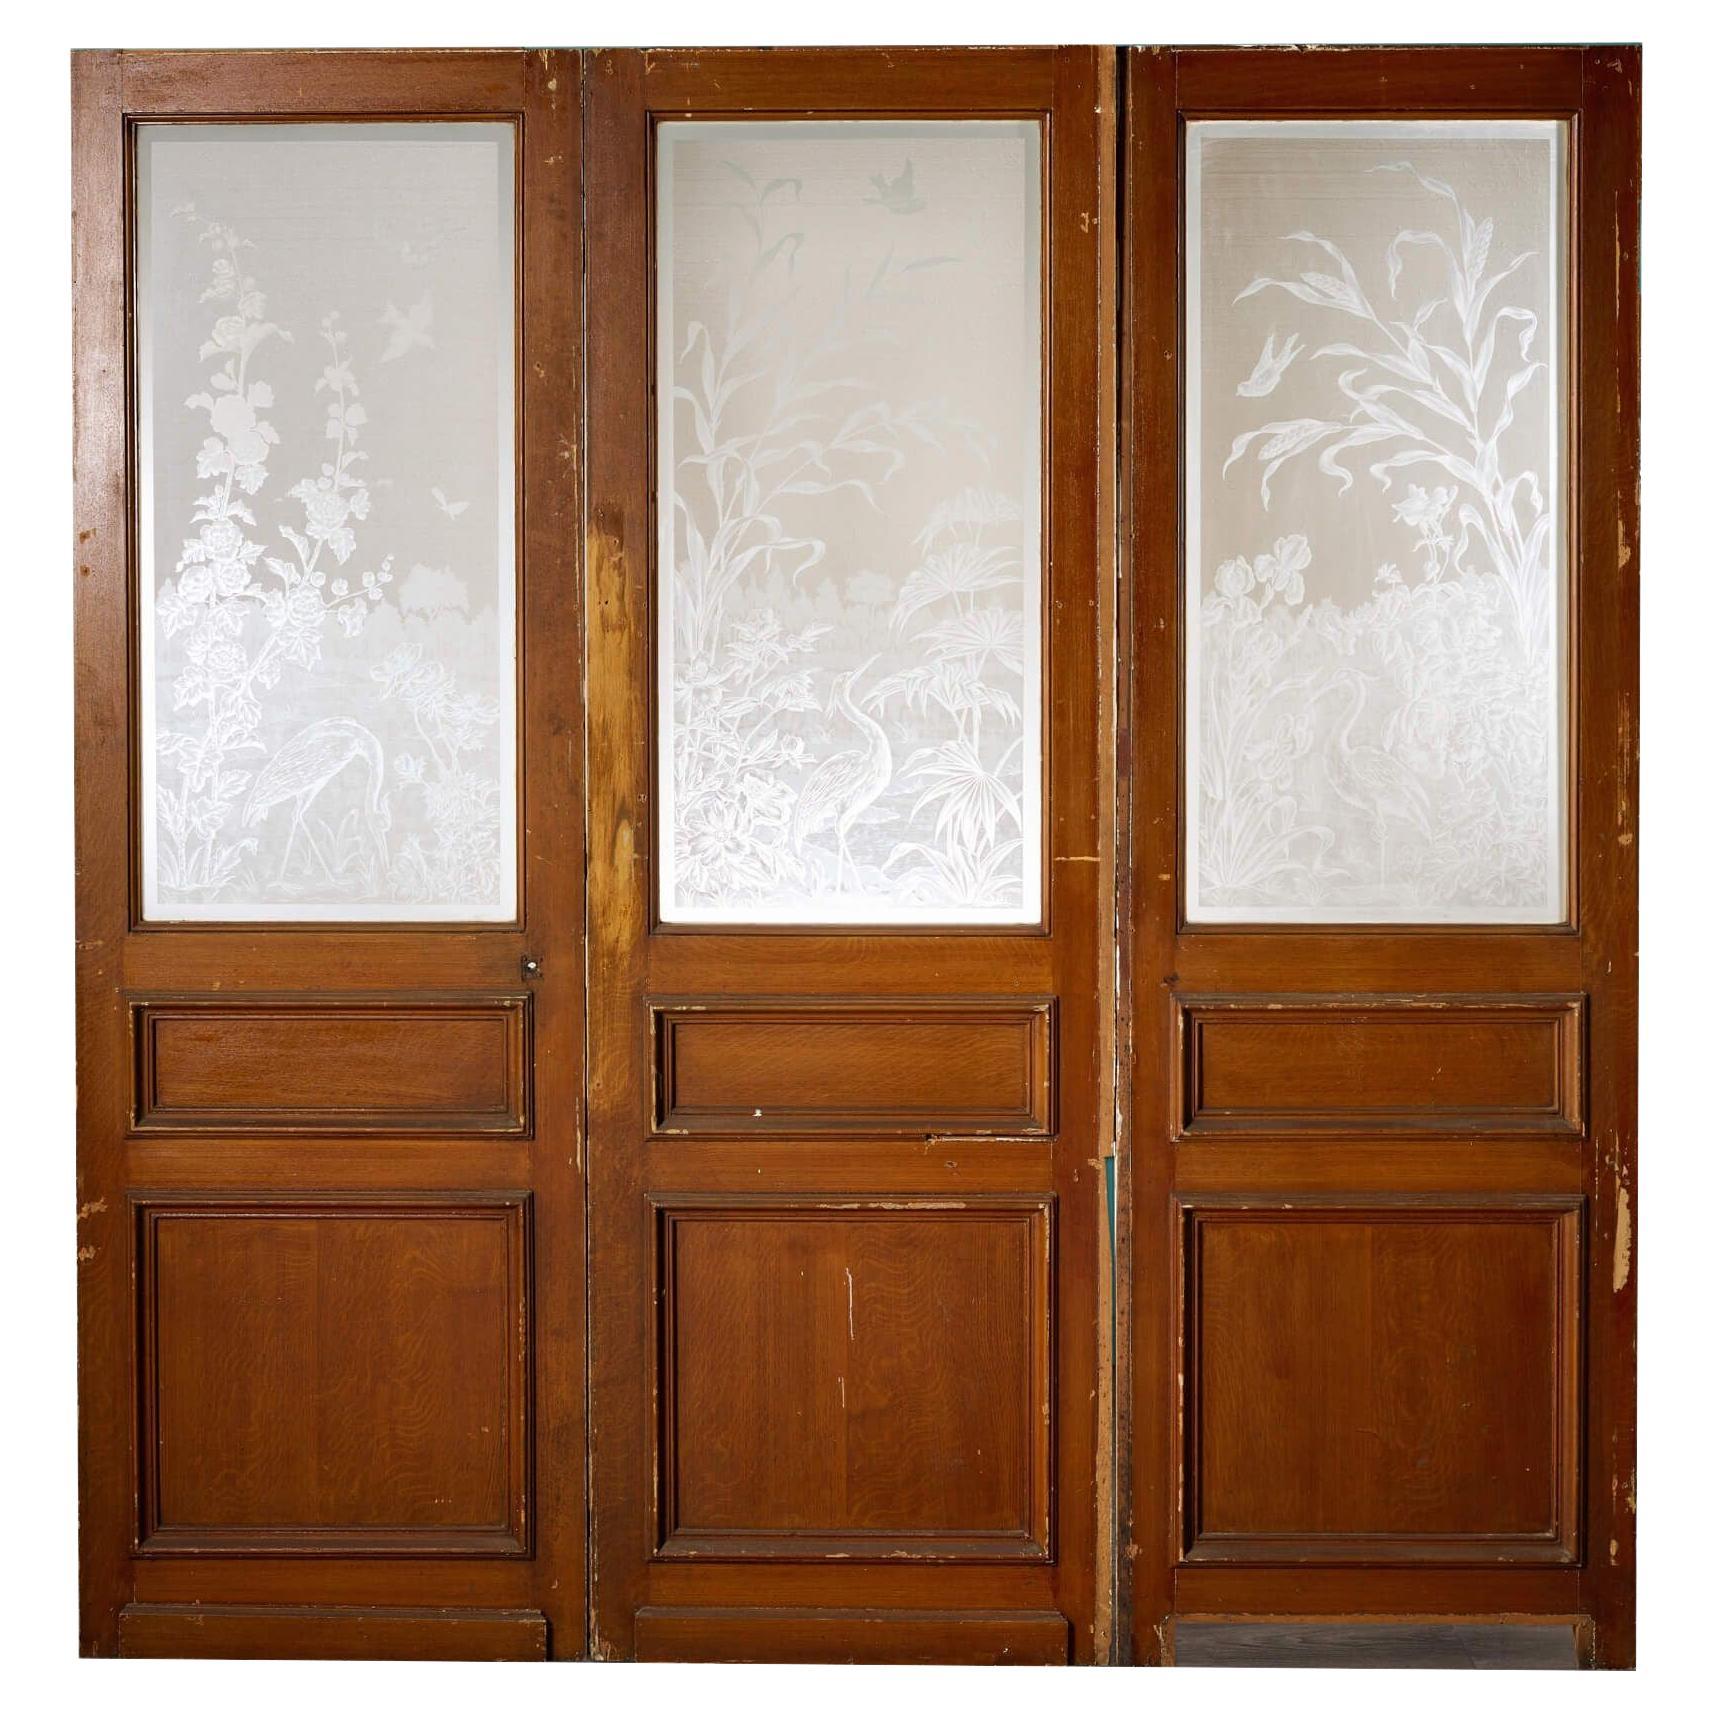 Set of 3 Victorian Internal Acid Etched Glass Doors